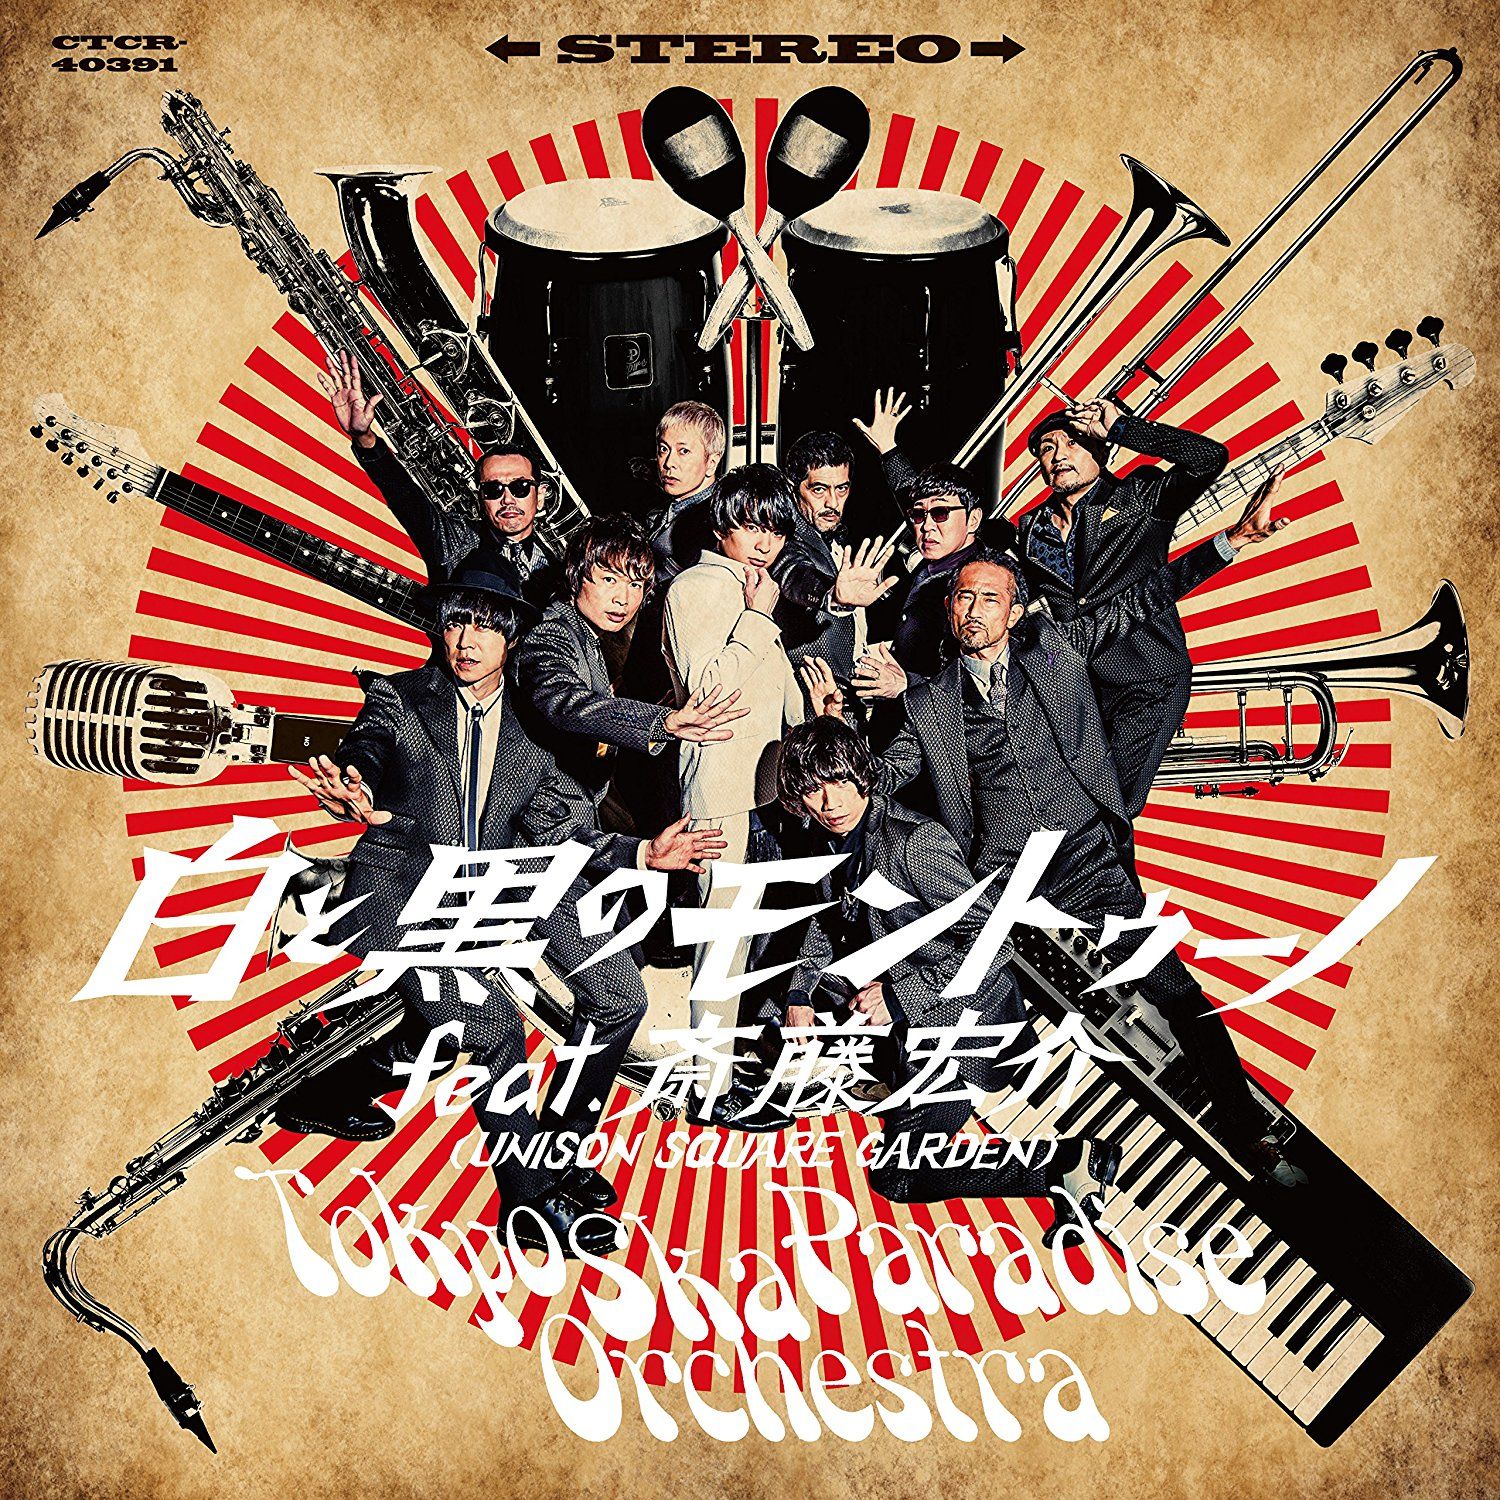 Tokyo Ska Paradise Orchestra - 白と黒のモントゥーノ feat.斎藤宏介(UNISON SQUARE GARDEN)